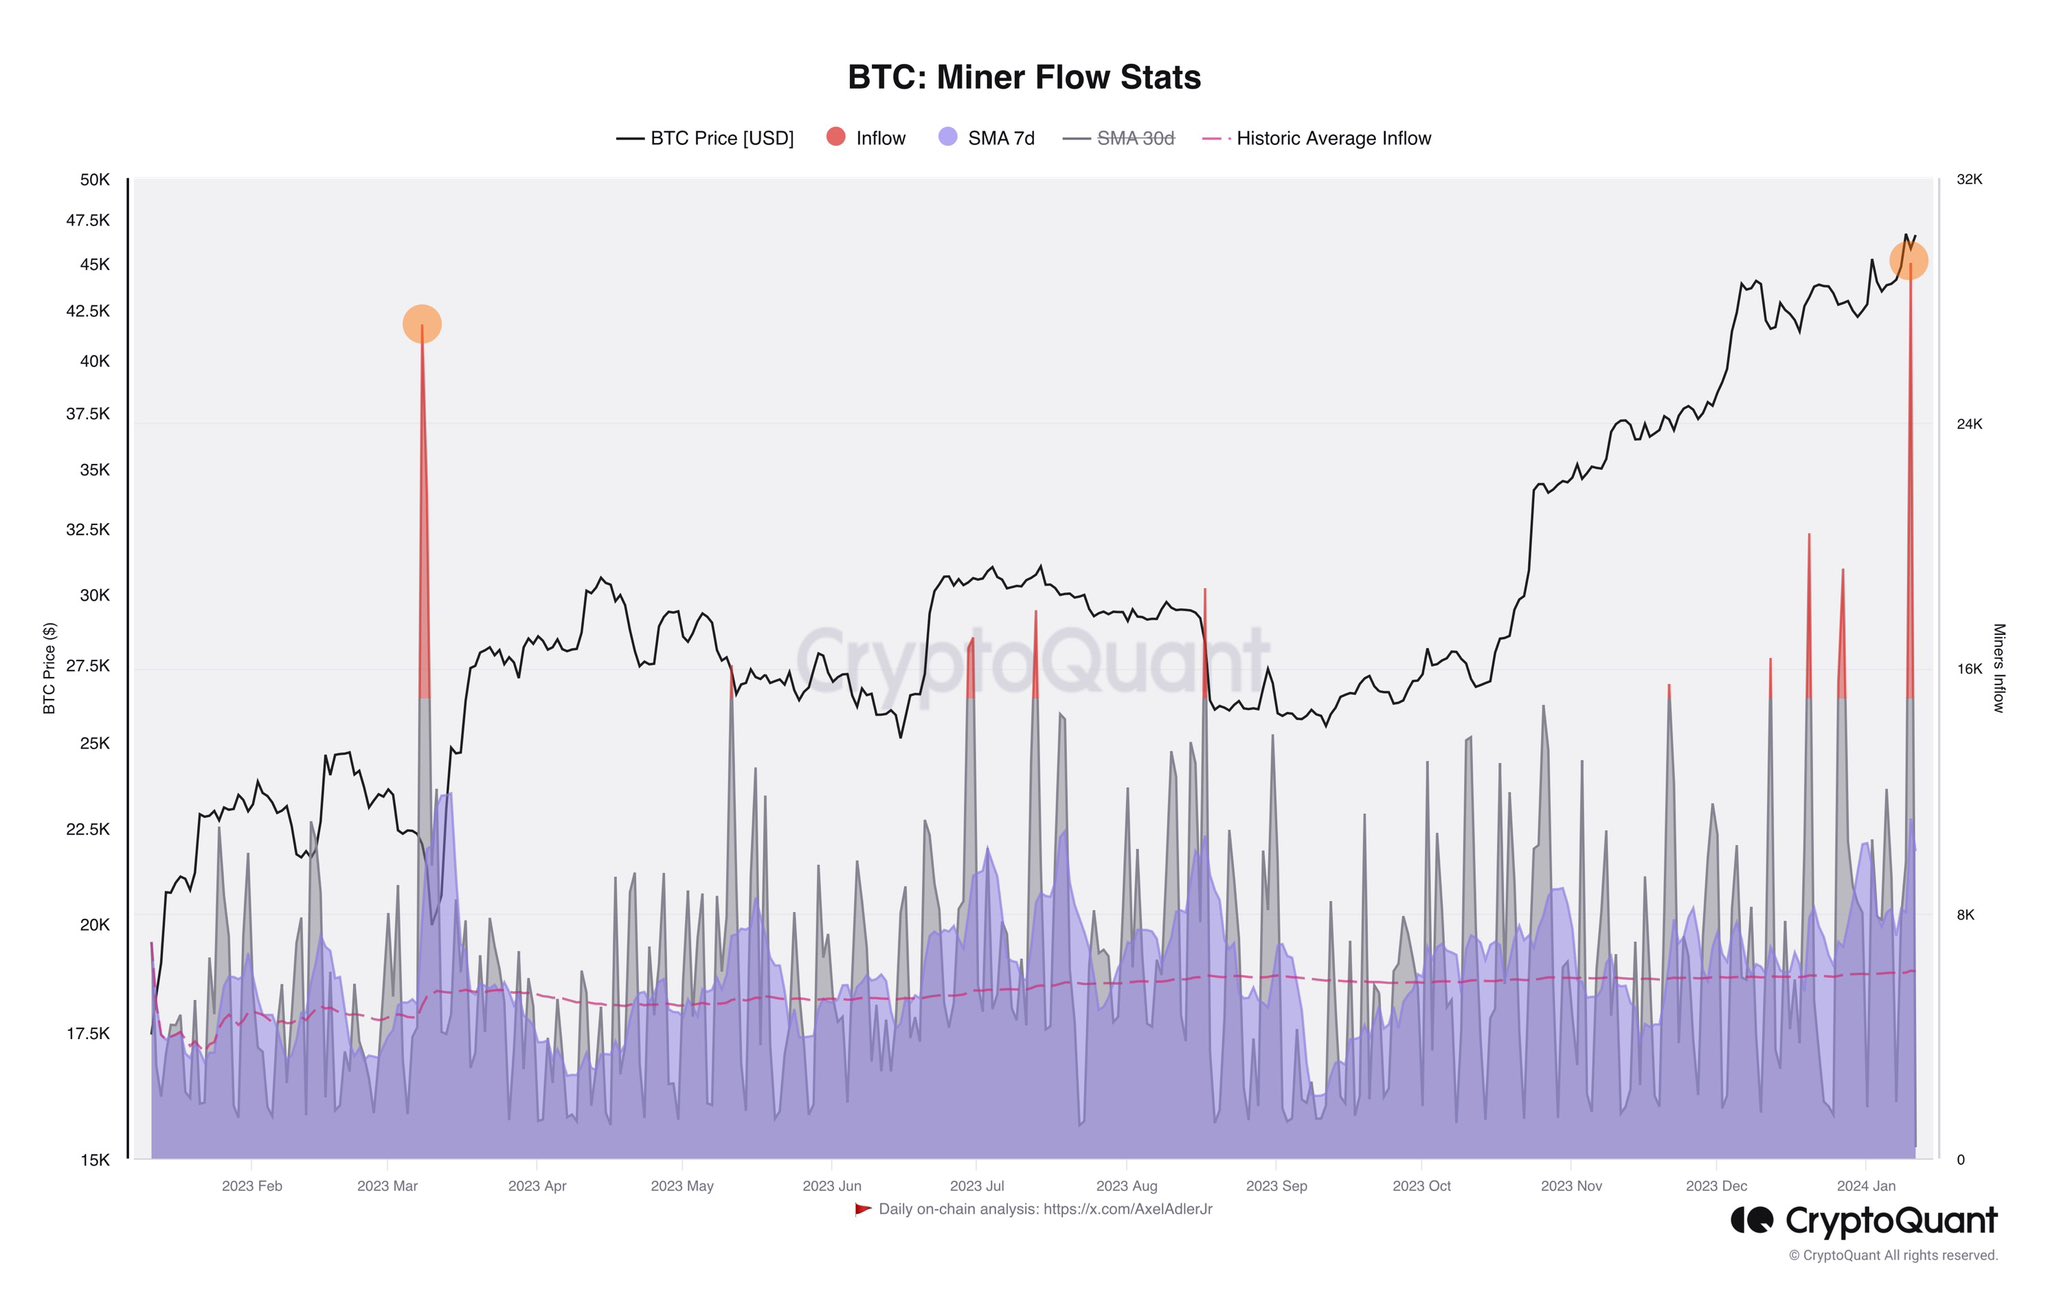 Bitcoin miner flows